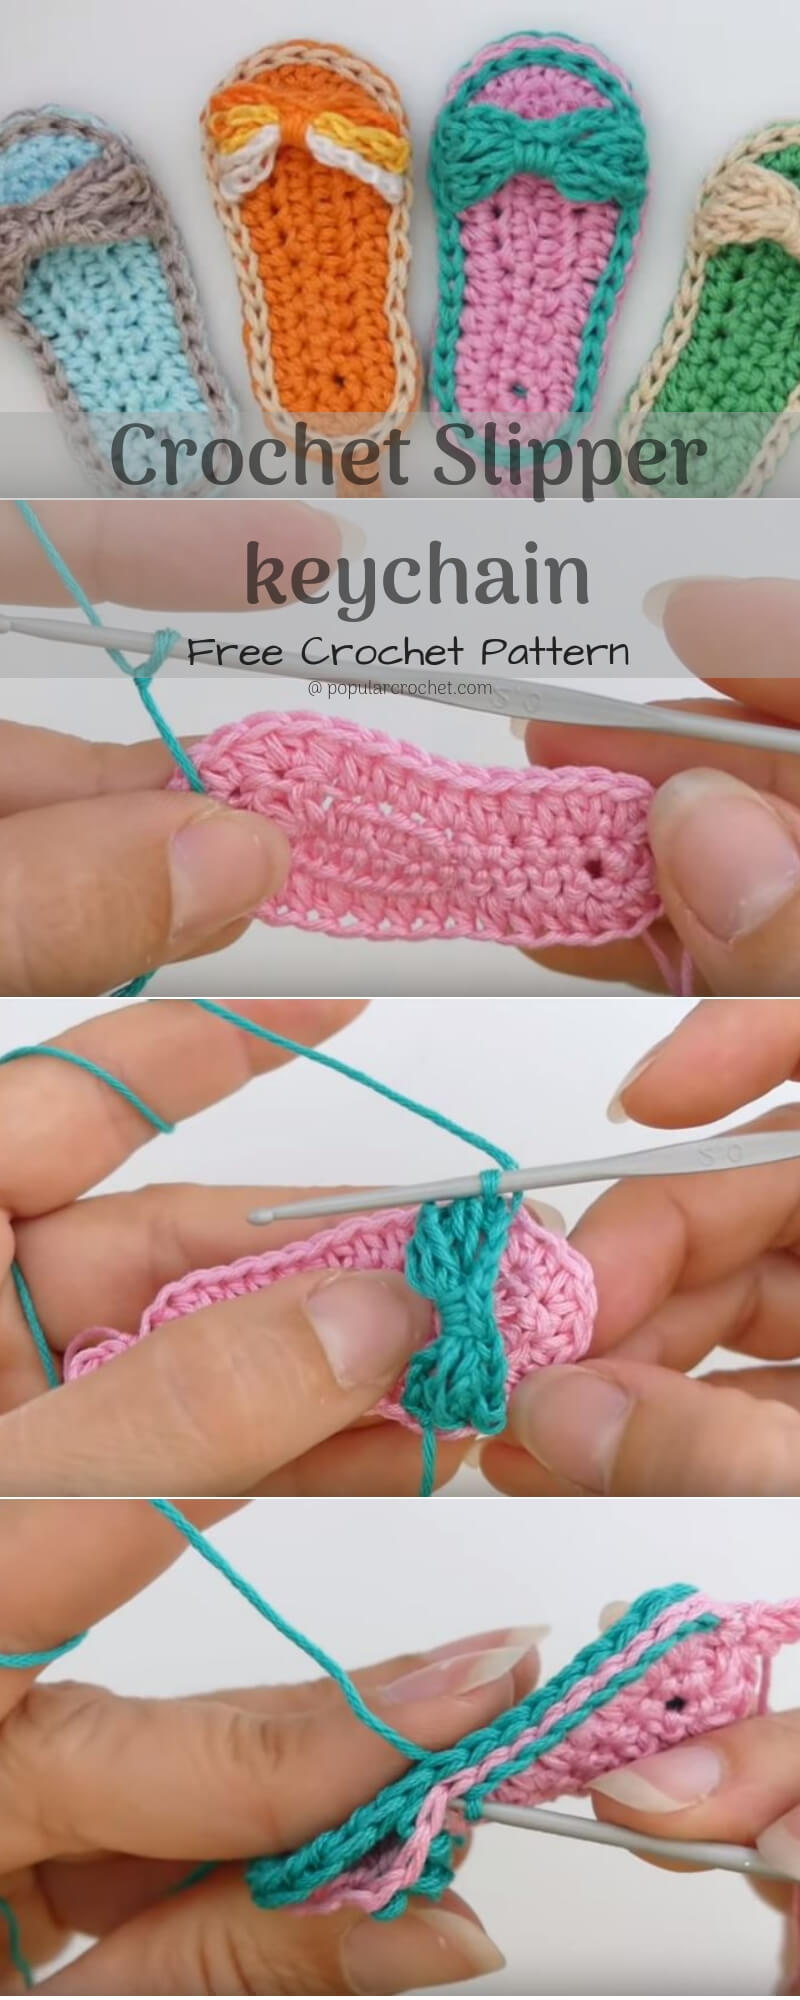 Crochet a Coaster popularcrochet.com #popularcrochet #crochet #slipper #keychain #freecrochetpattern 